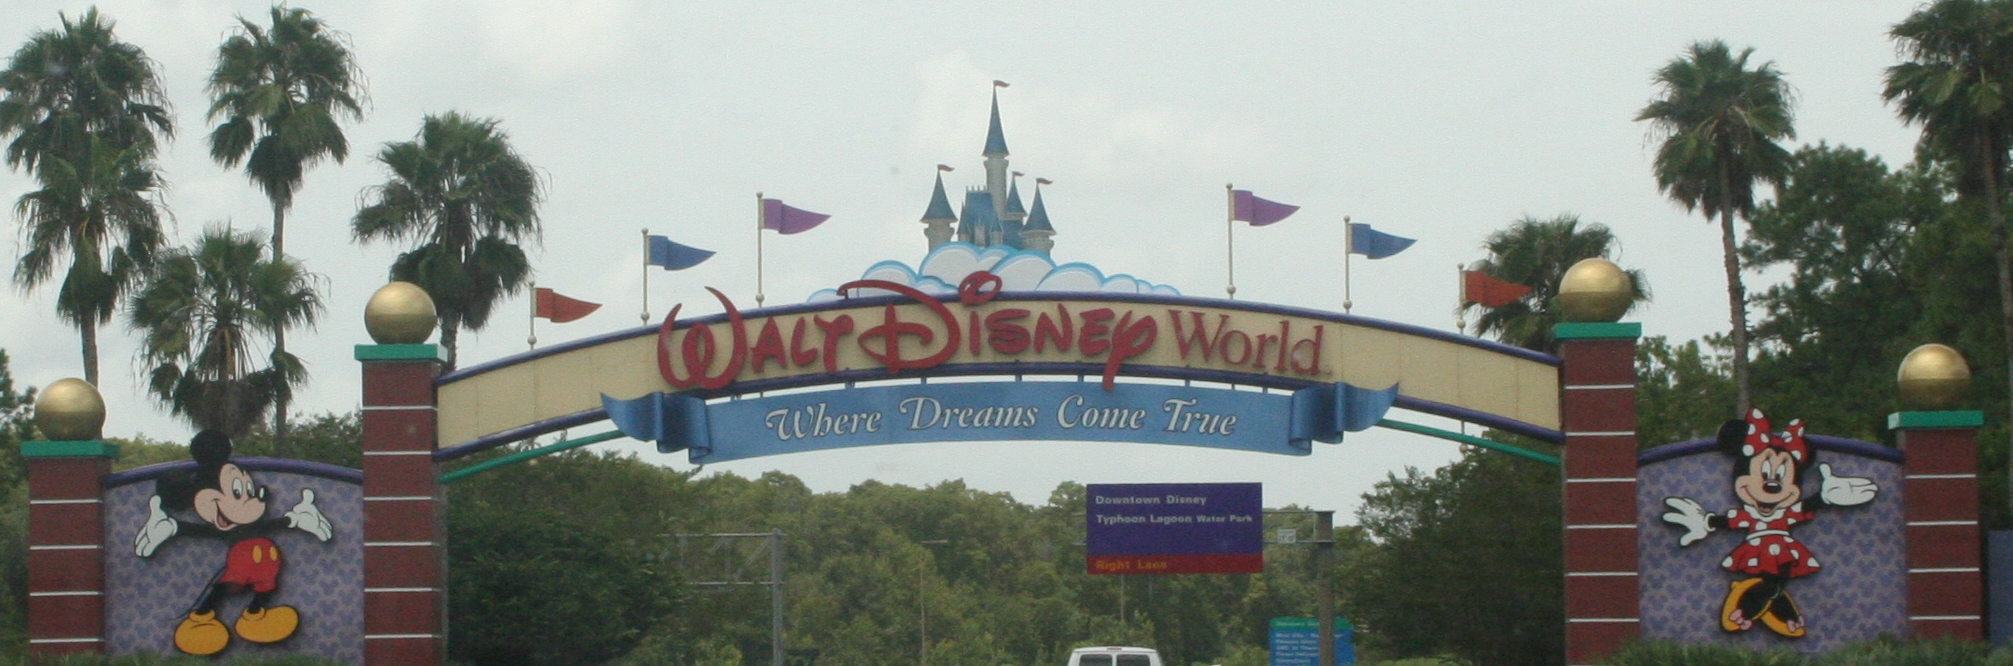 Walt Disney World Road Construction May Impact Weekend Visitors